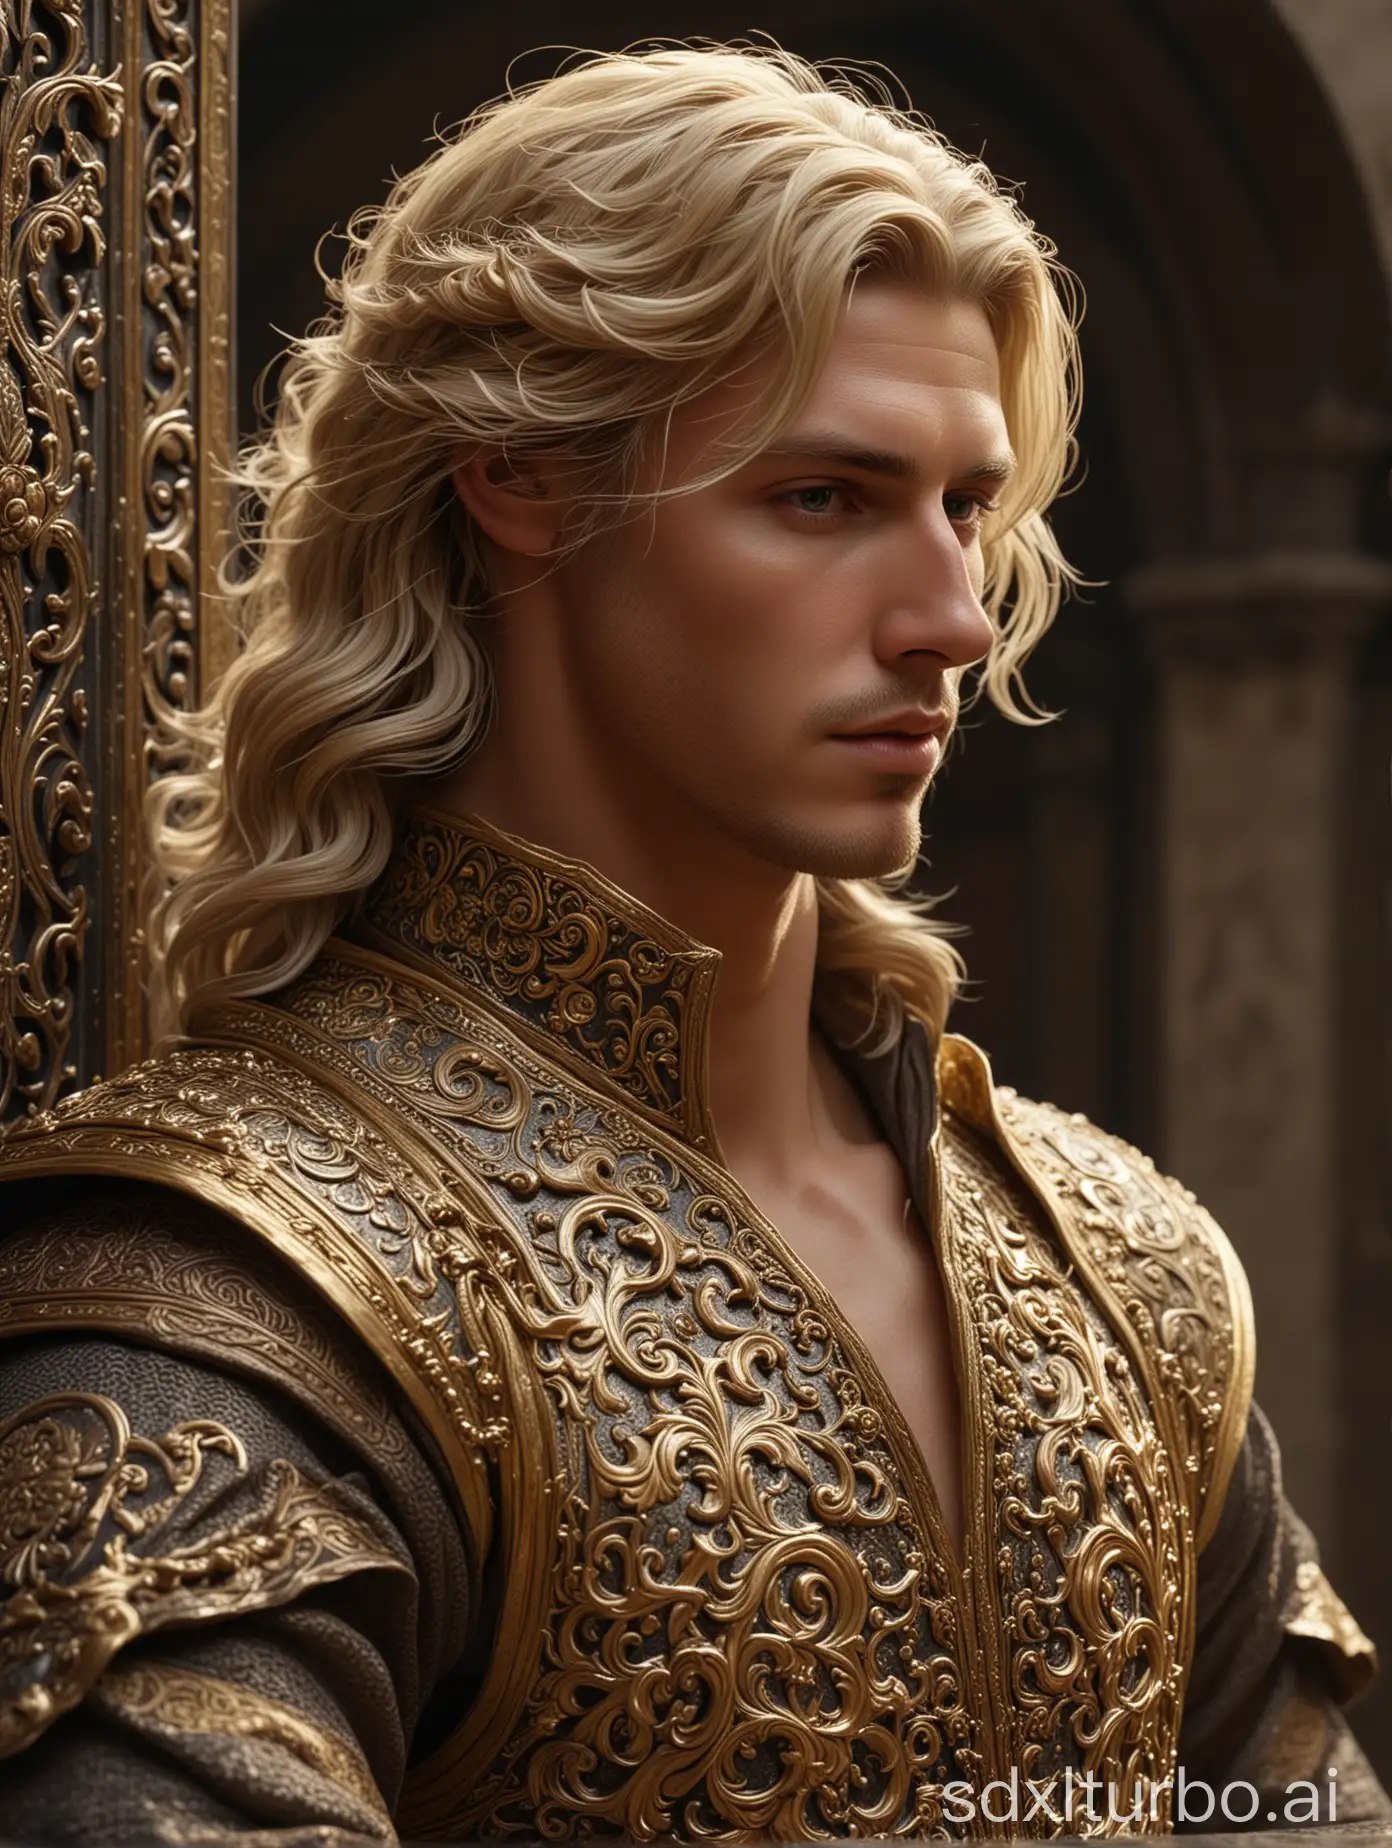 Medieval-Nobleman-with-Flowing-Blond-Locks-in-Exquisite-Costume-8K-Octane-Render-Concept-Art